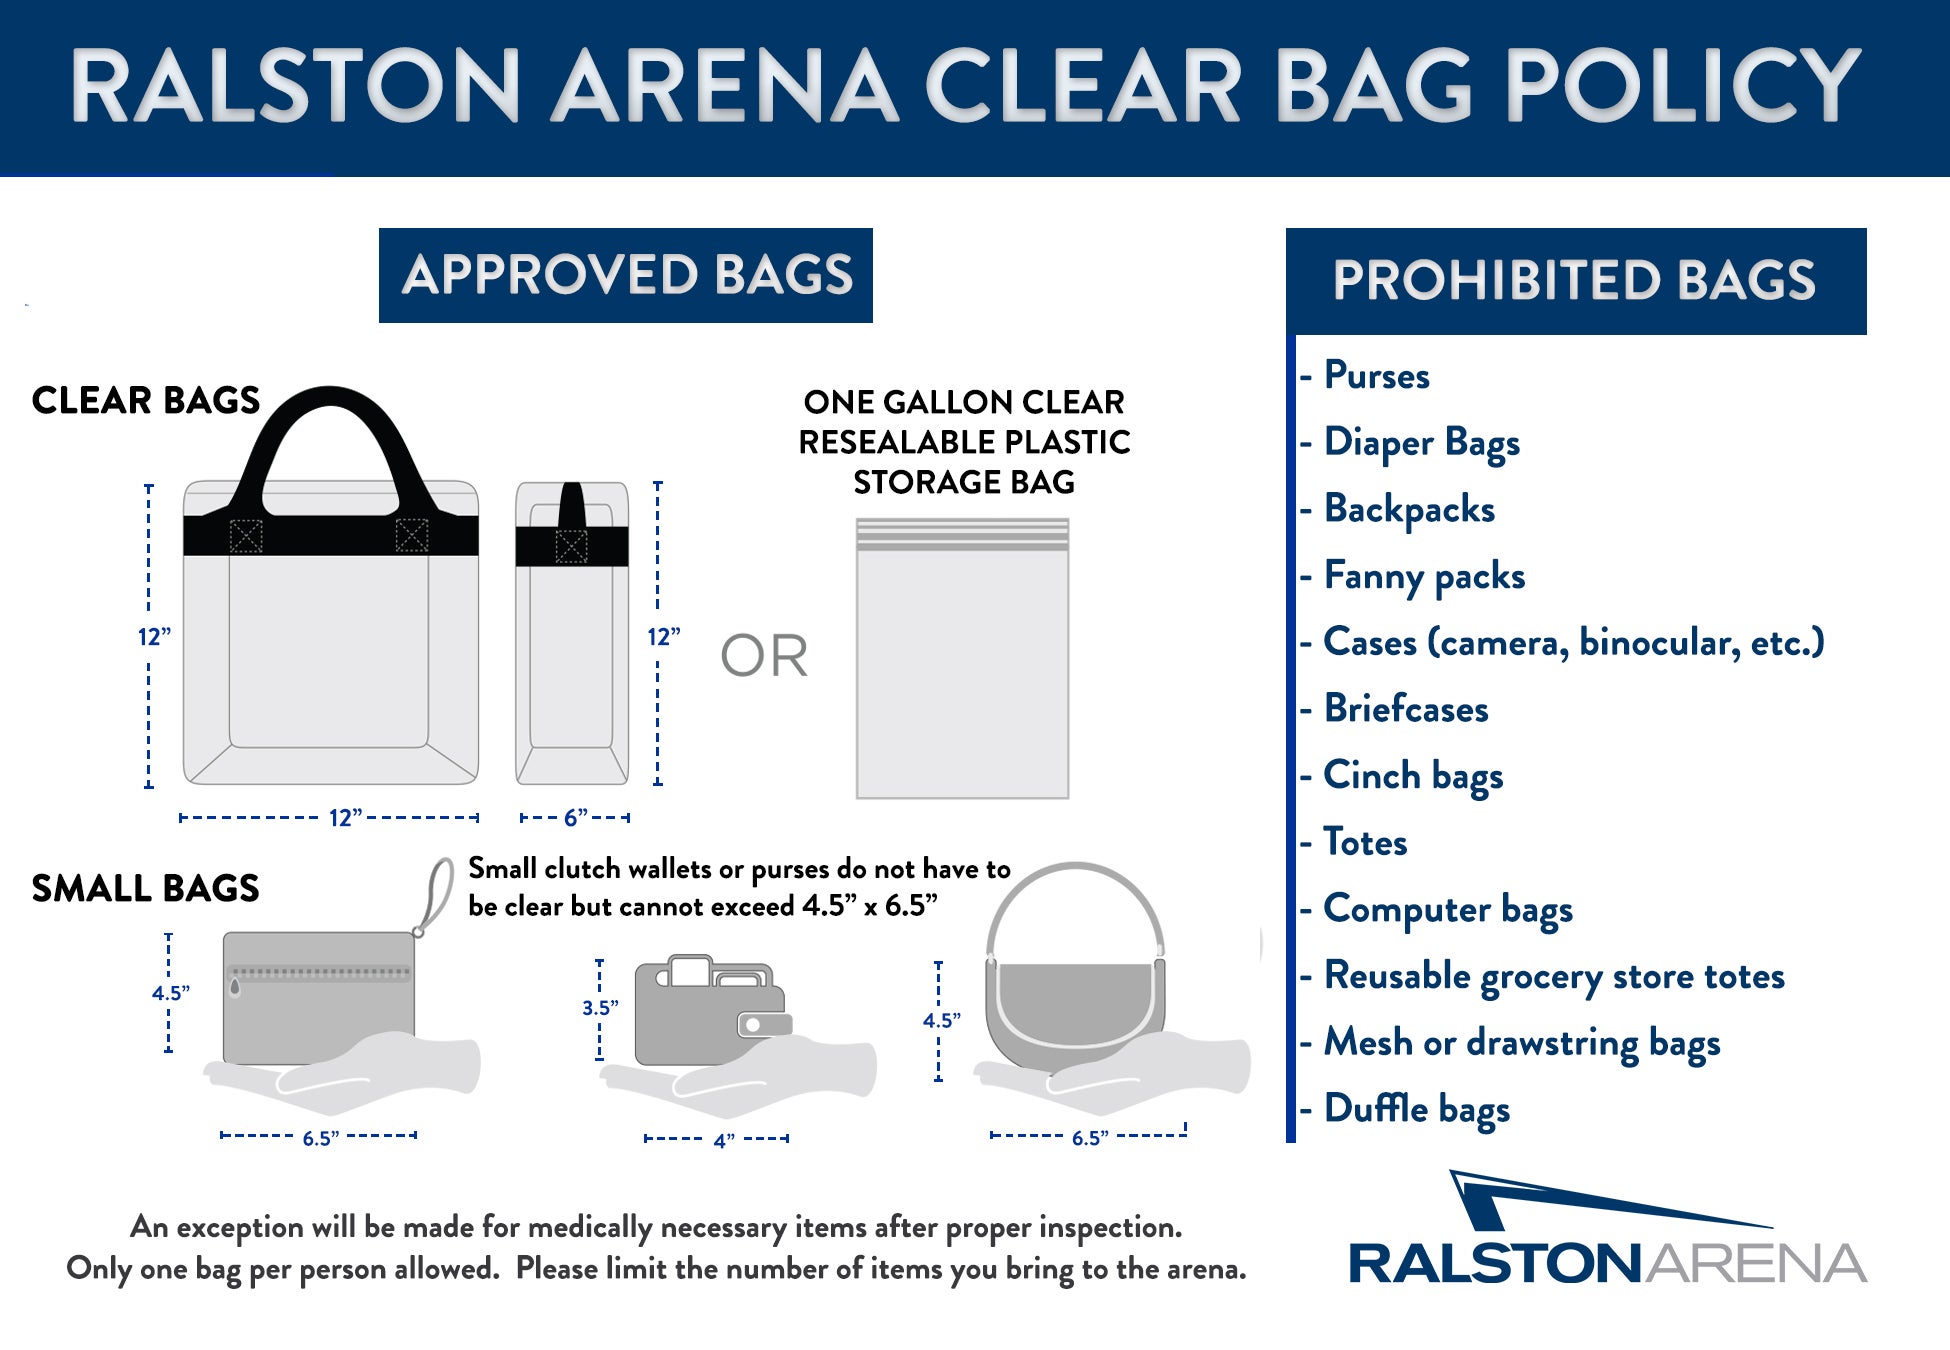 Pueblo Memorial Hall implements clear bag policy